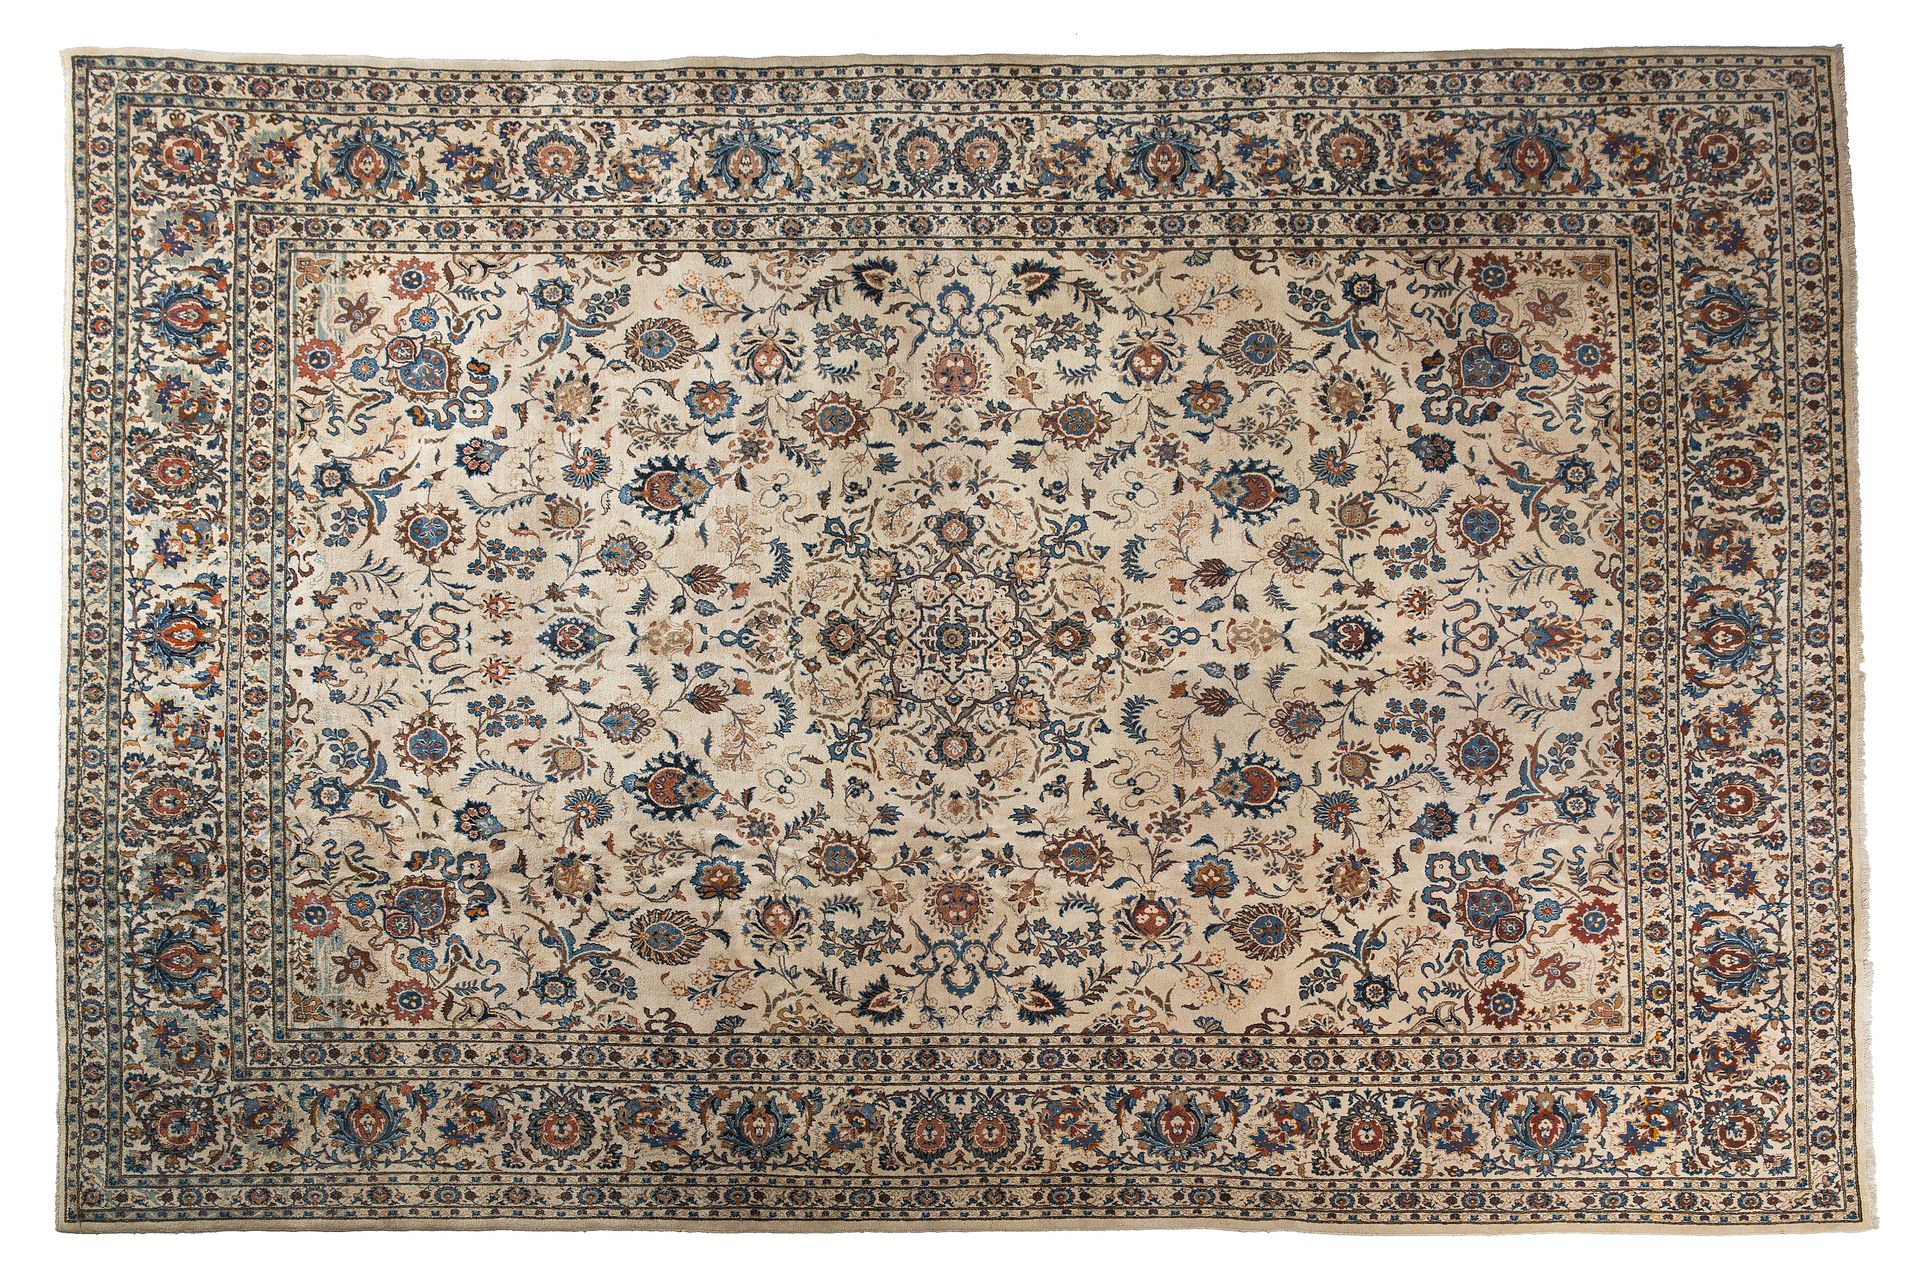 Null 重要的KACHAN地毯（伊朗），20世纪中期

一个象牙领域，装饰有开花的花茎，植物枝条和 "Tchis"（象征性的云），在其中心支撑着一个精致的花卉&hellip;